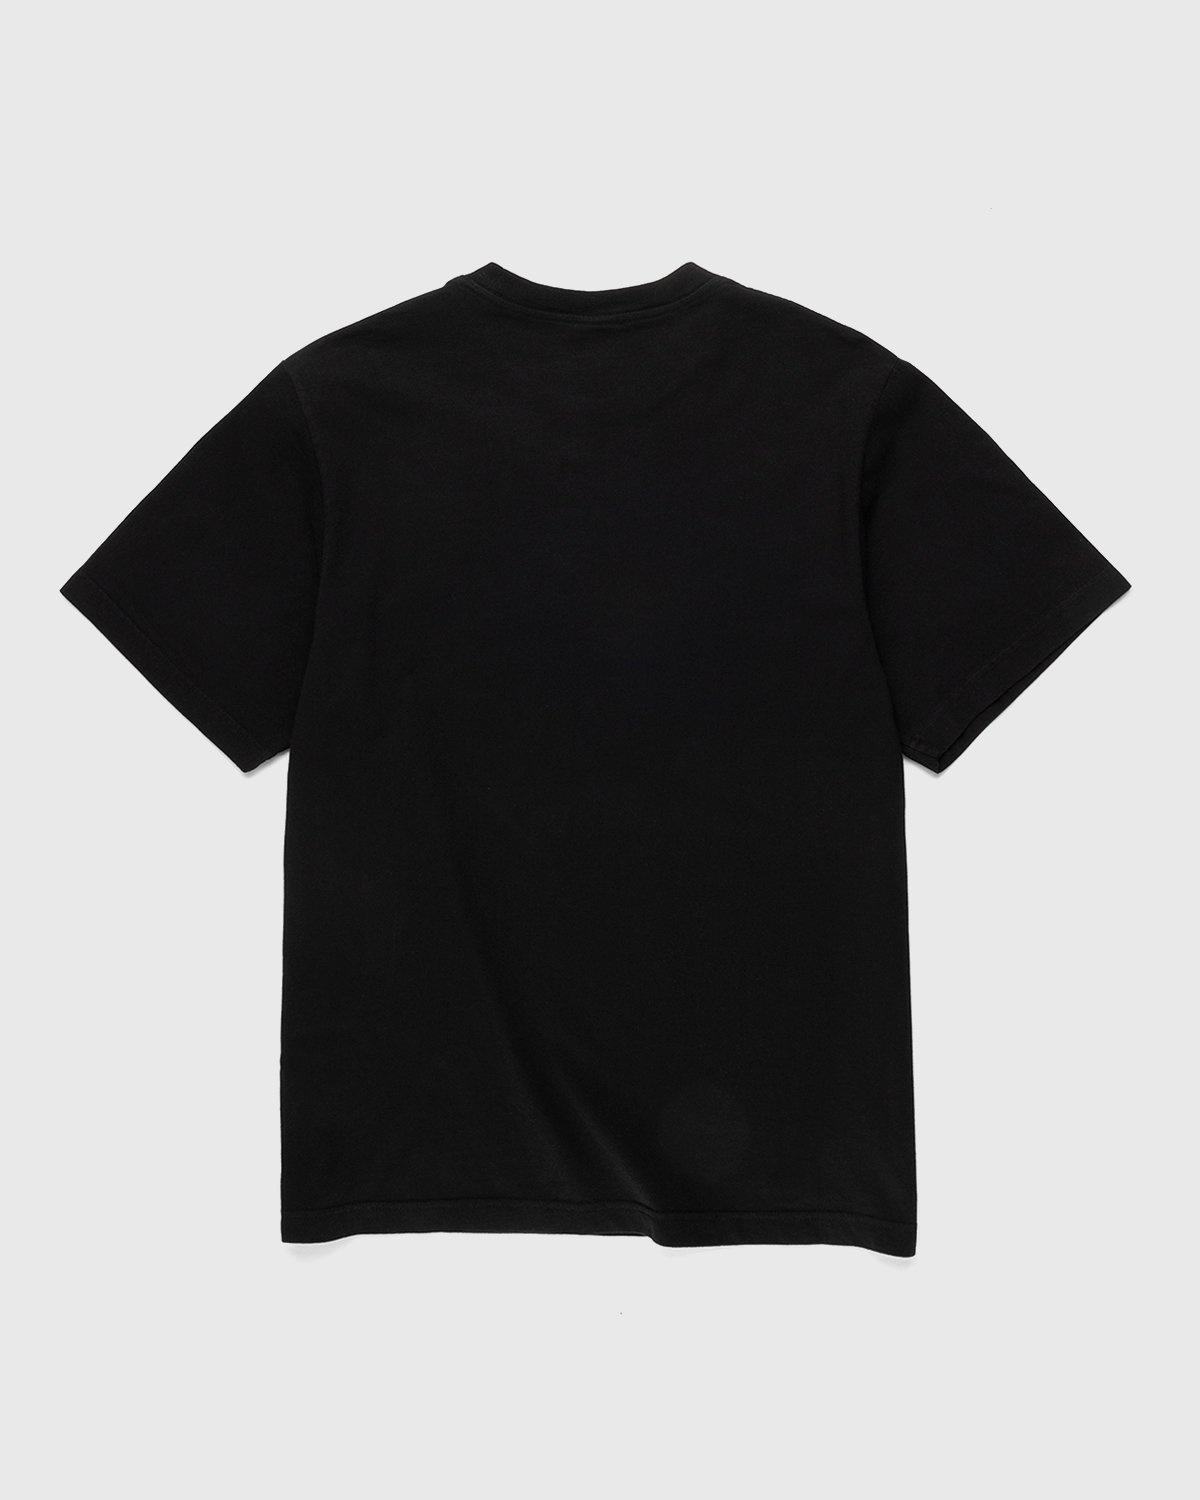 Noon Goons – Compass Tshirt Black | Highsnobiety Shop